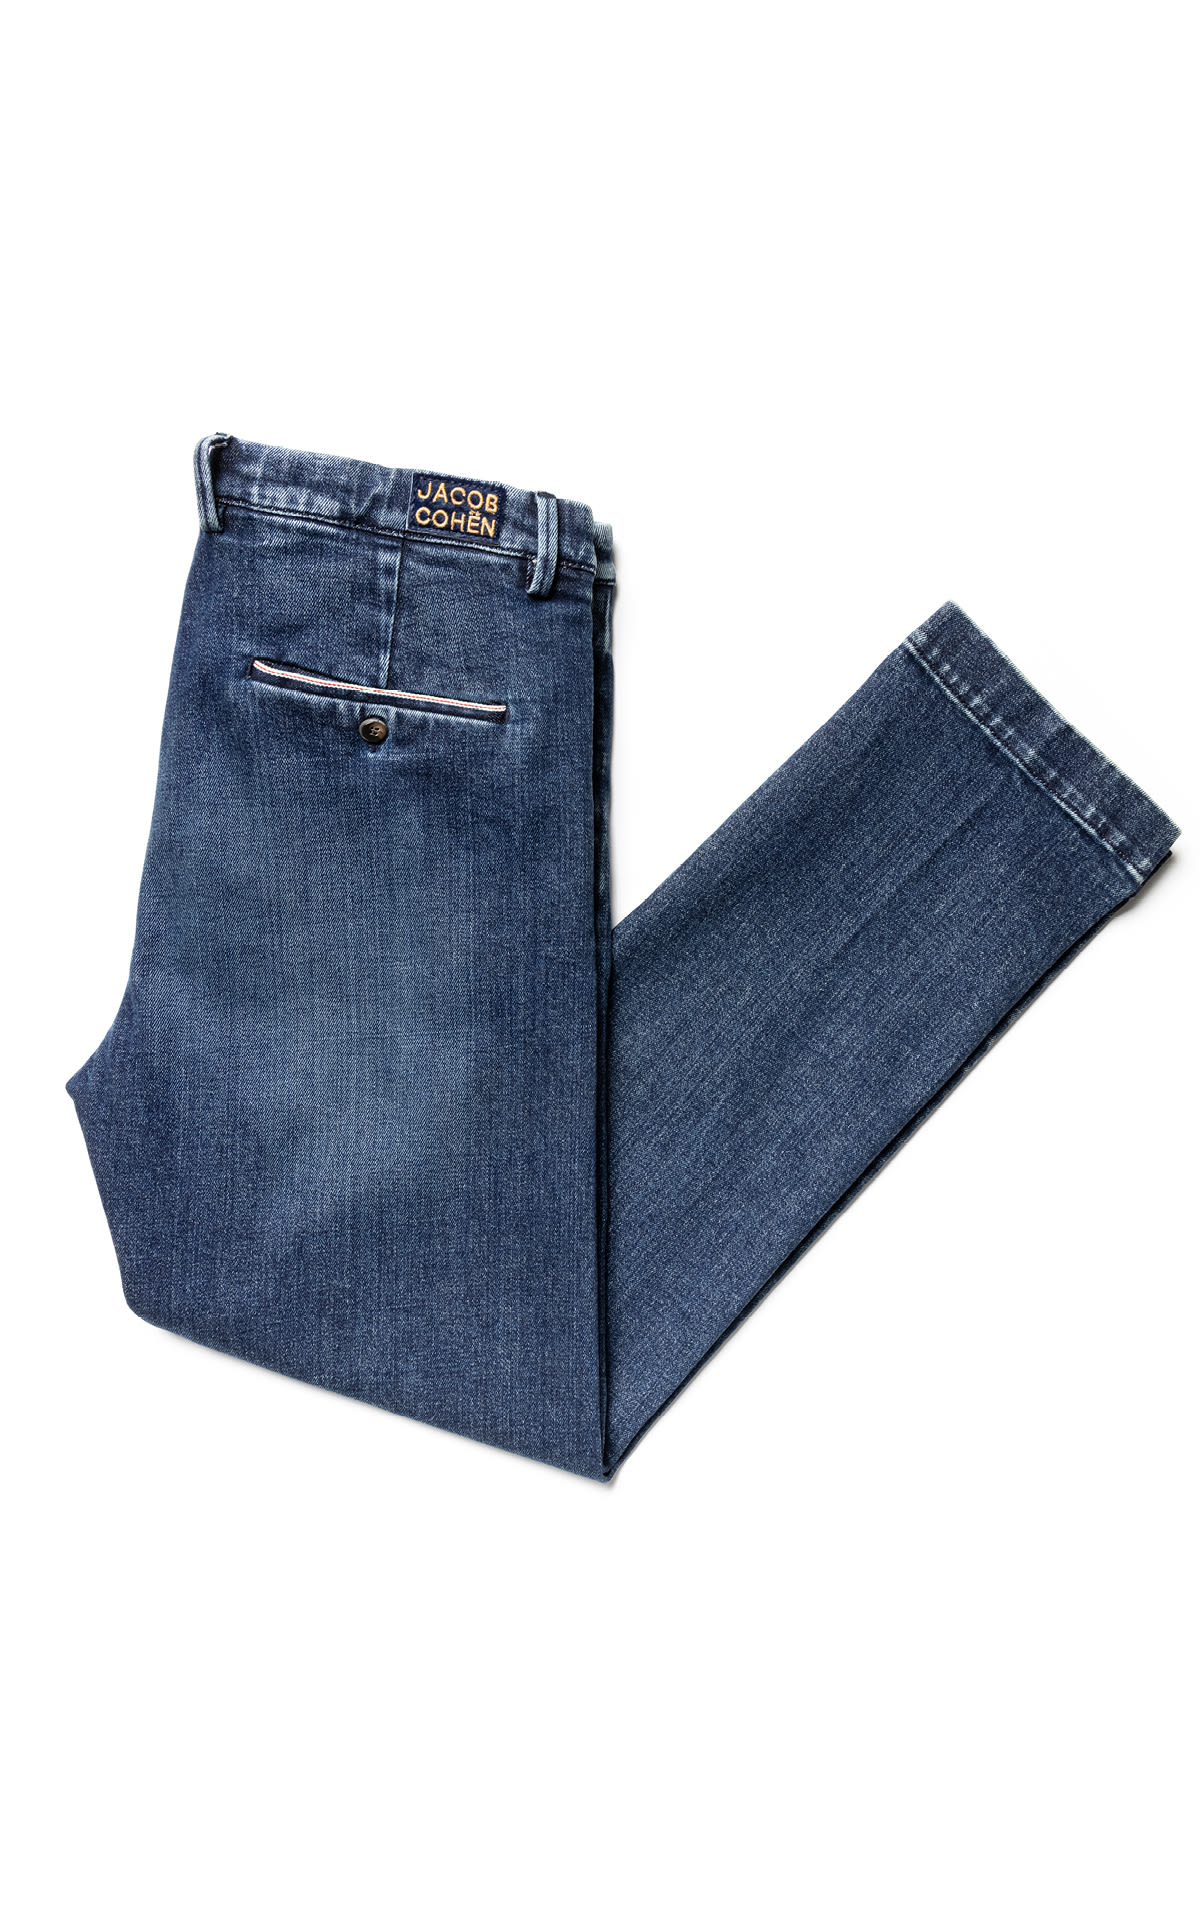 Jacob Choen Denim jeans